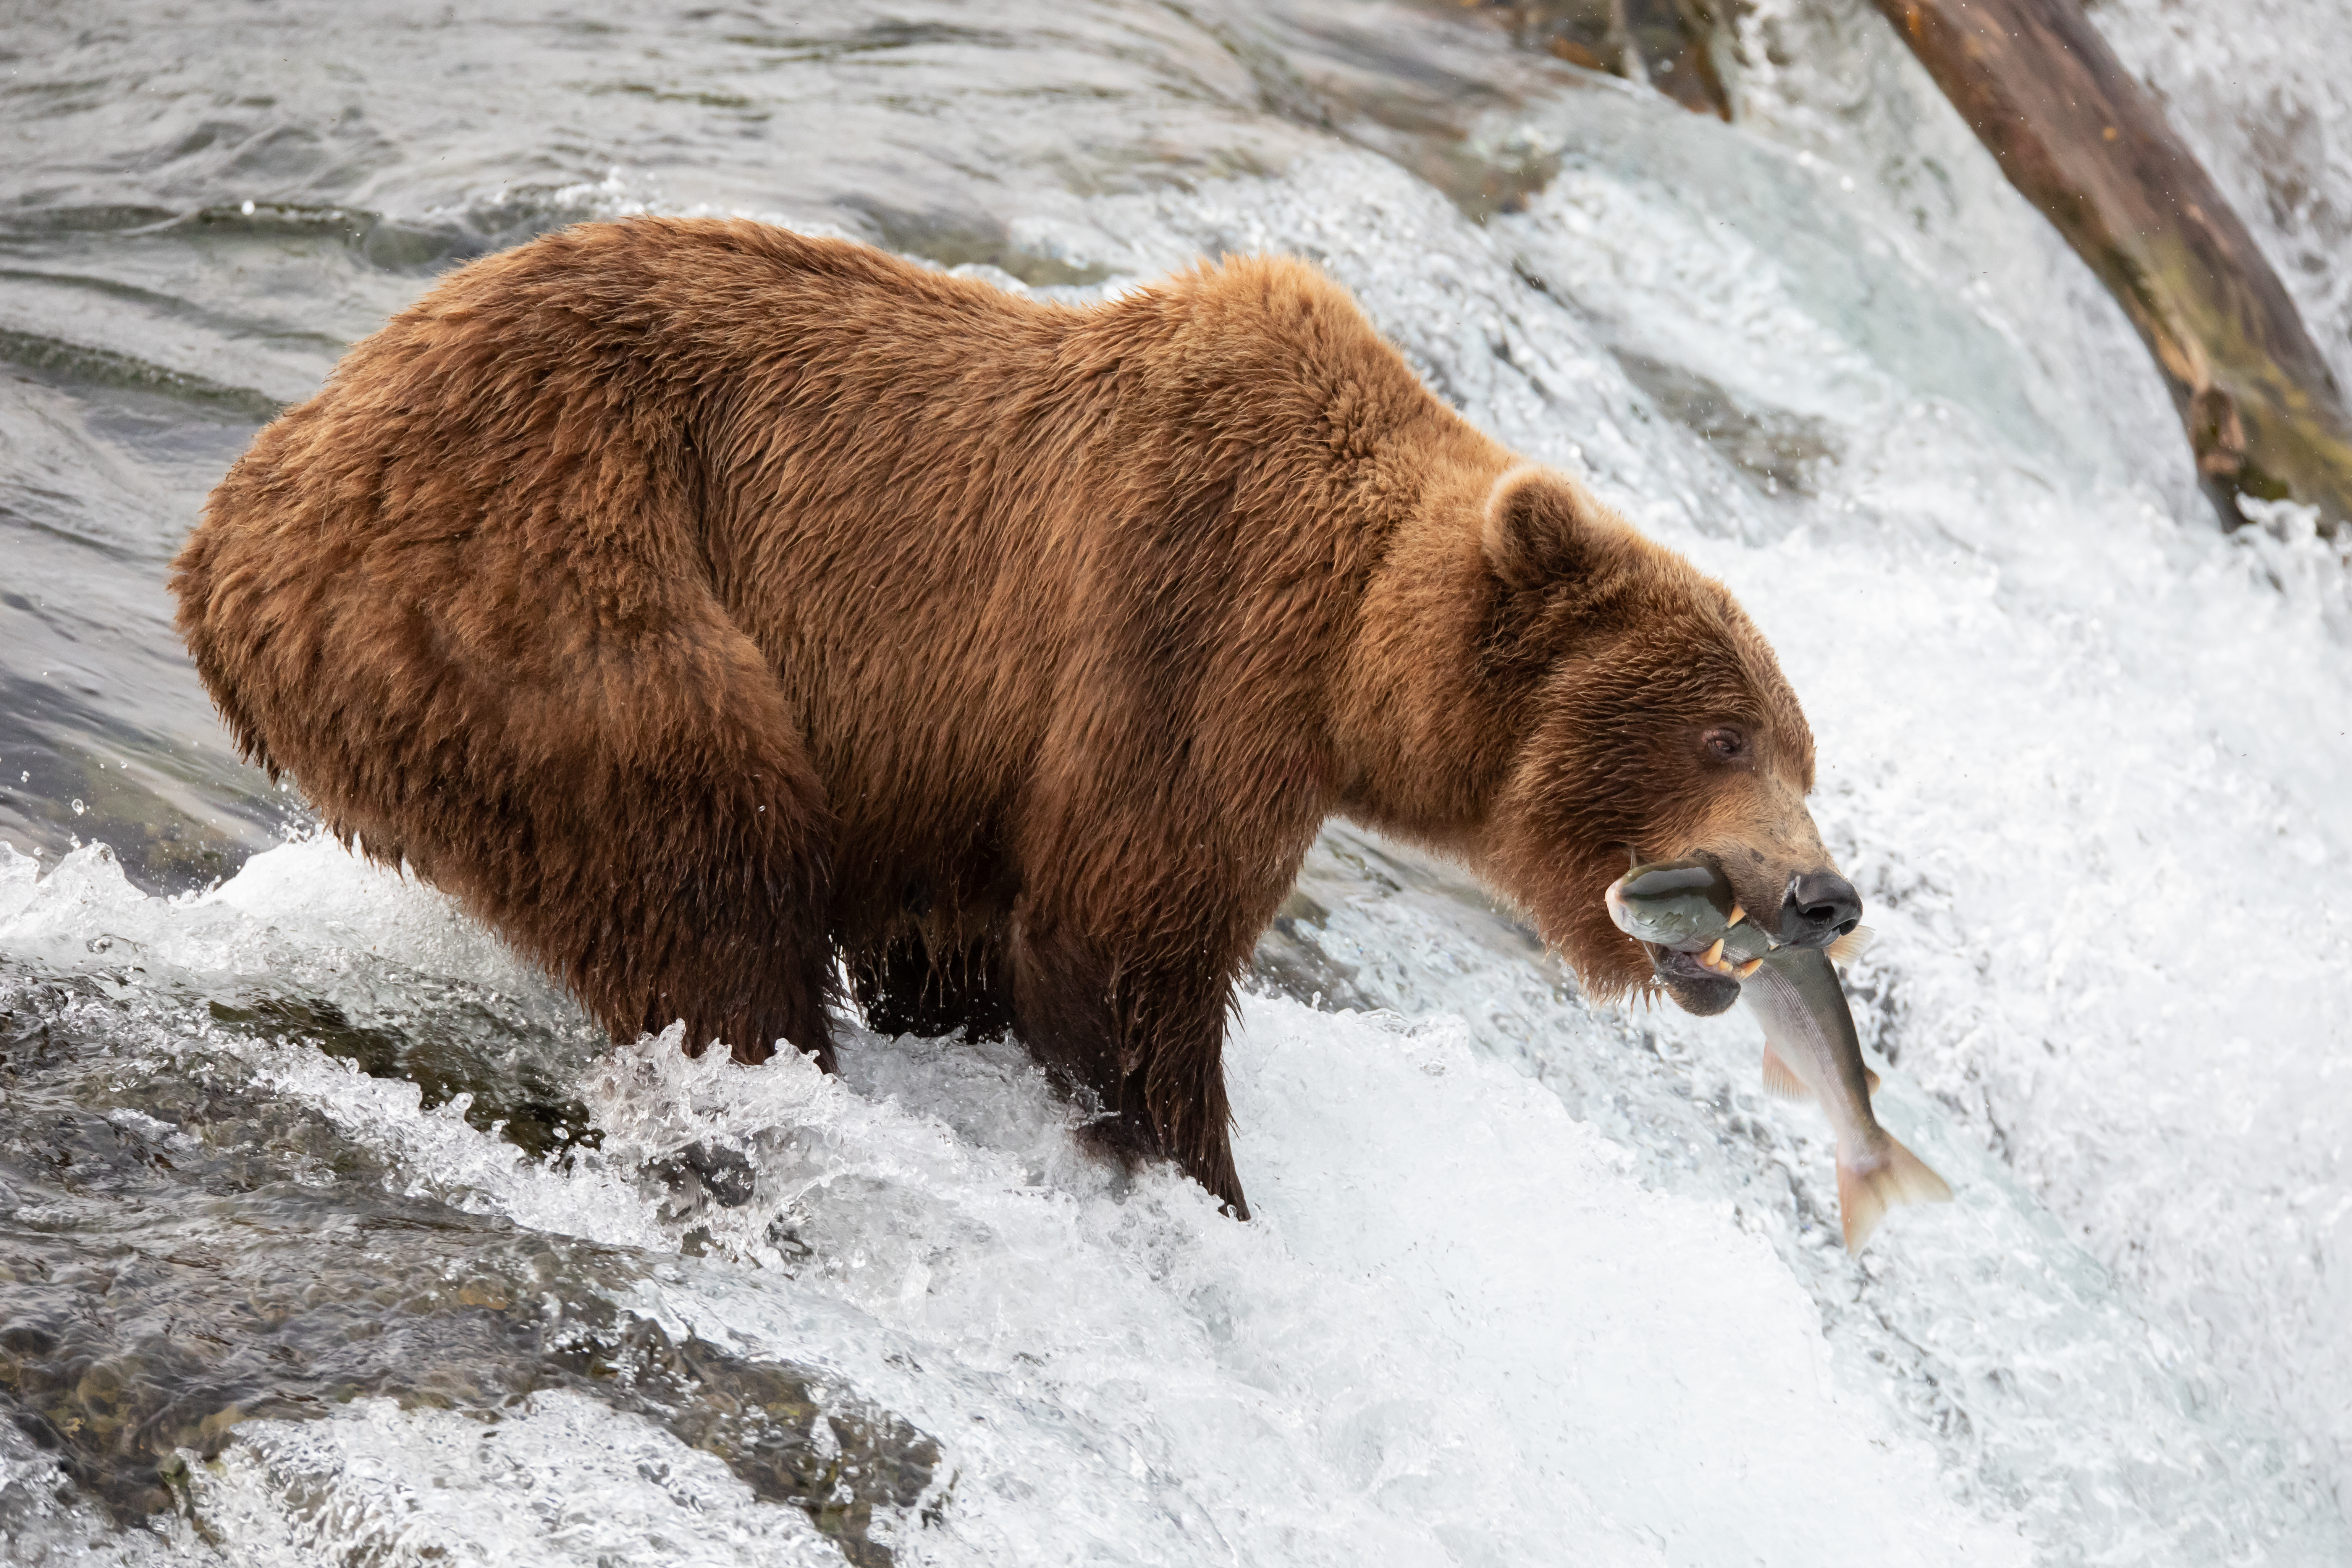 473359 descargar imagen animales, grizzly, pez, oso pardo, osos: fondos de pantalla y protectores de pantalla gratis